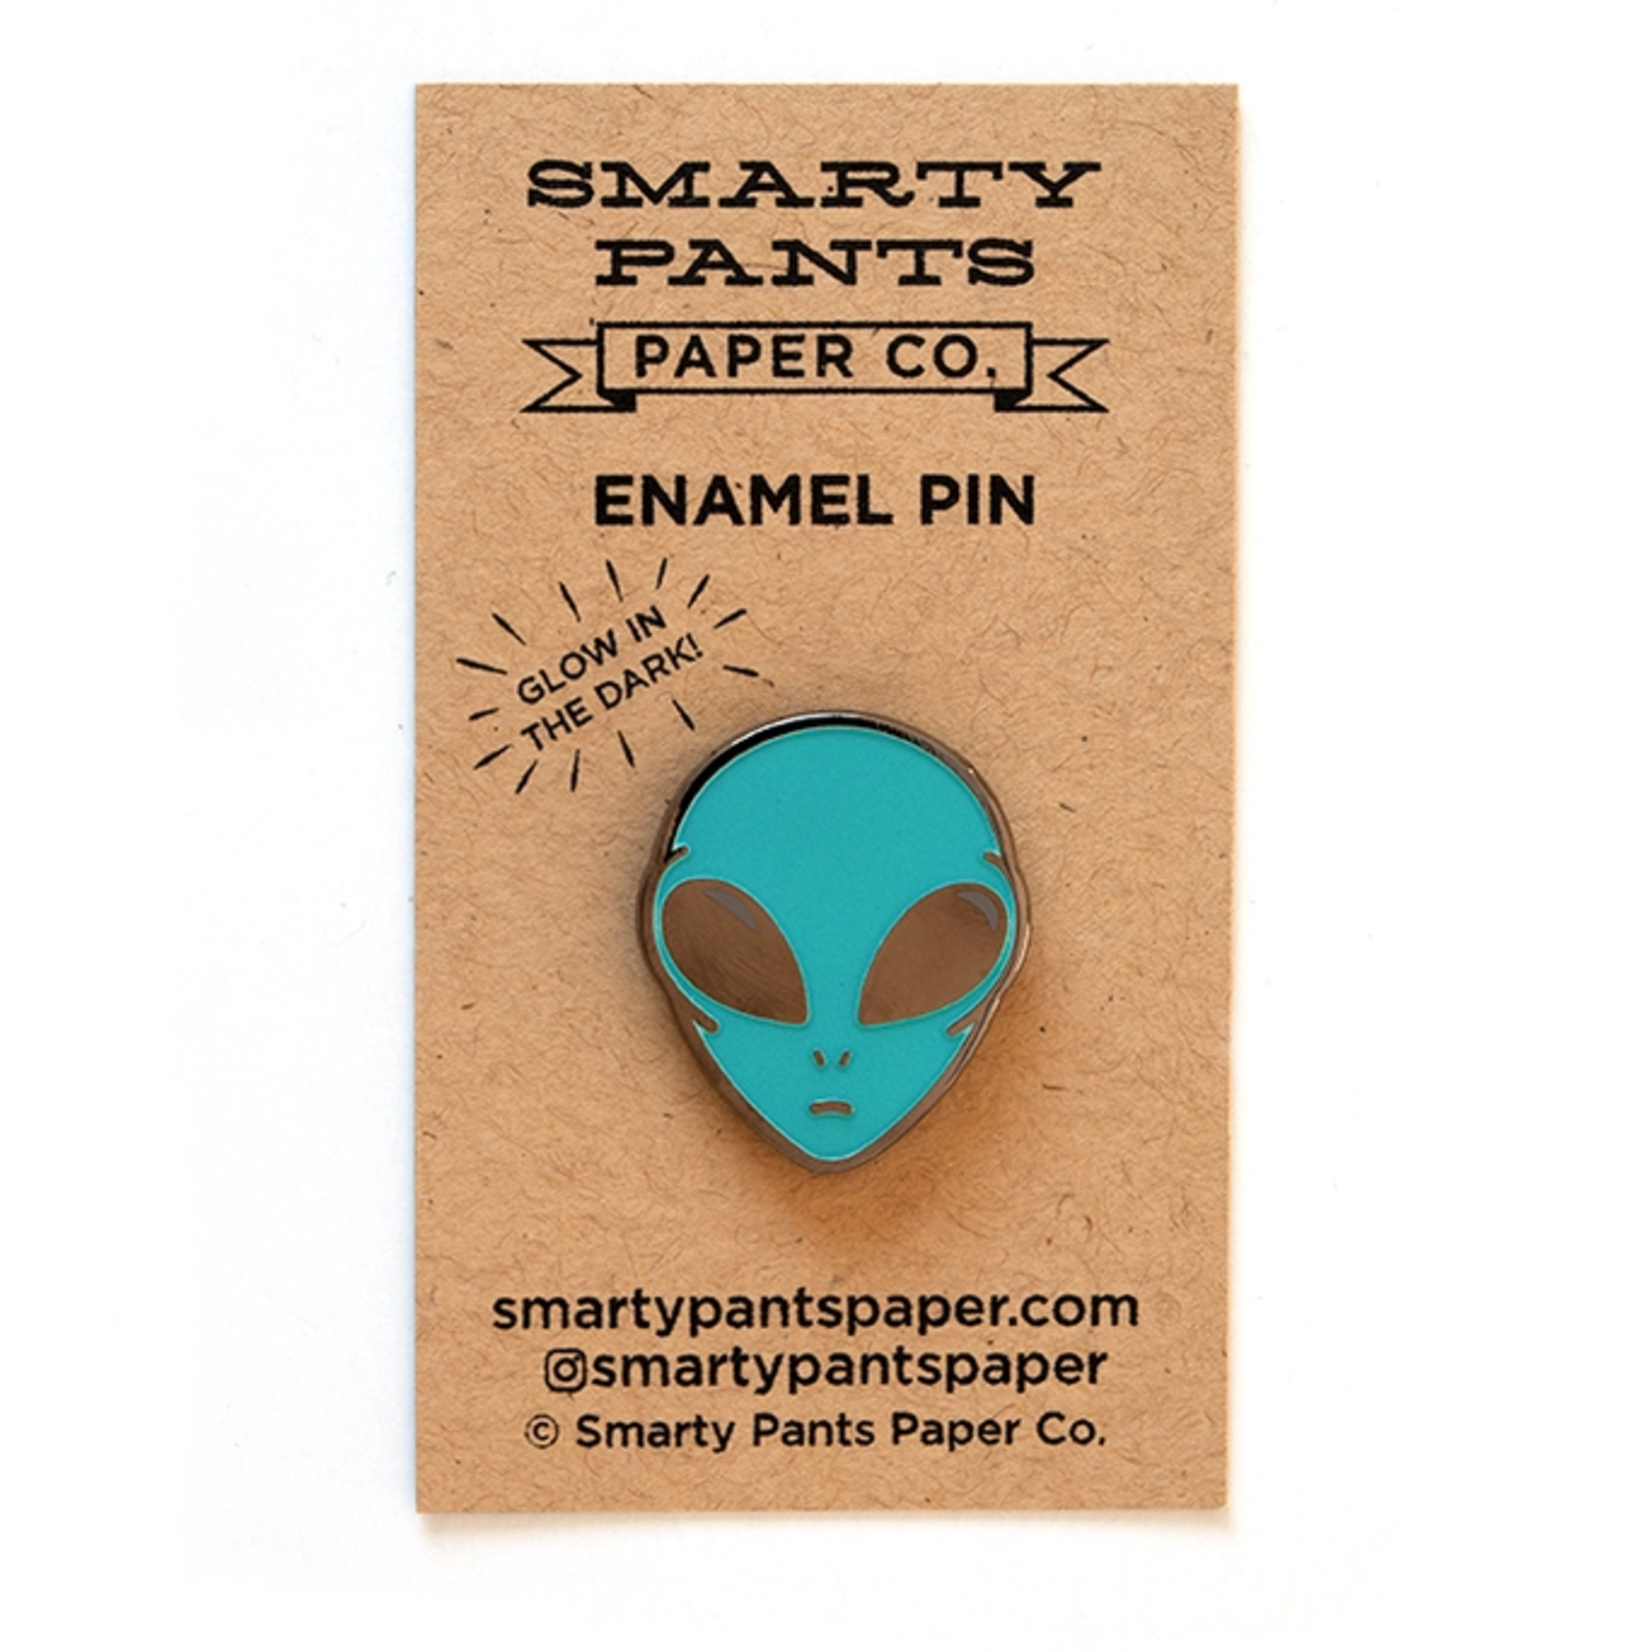 Smarty Pants Paper Co. Alien Pin